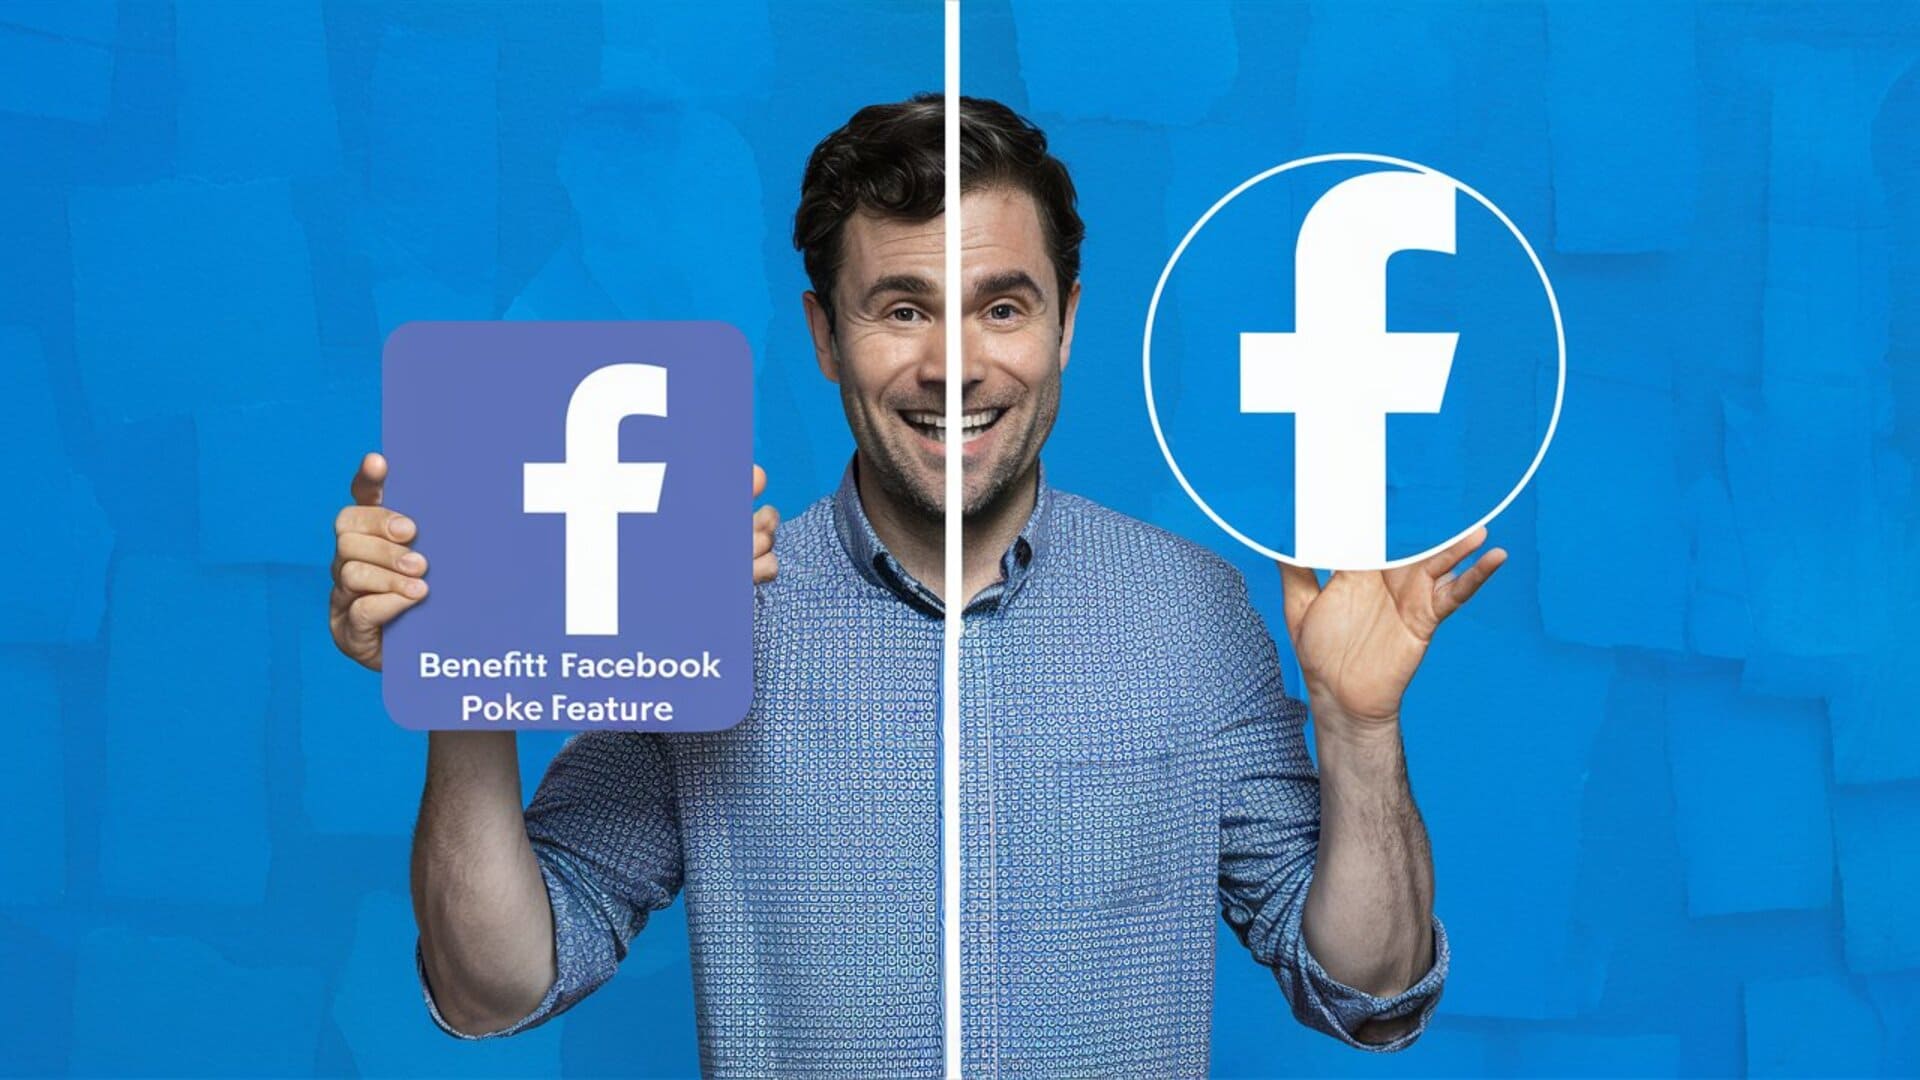 Facebook poke benefit; FaceBook Poke Feature